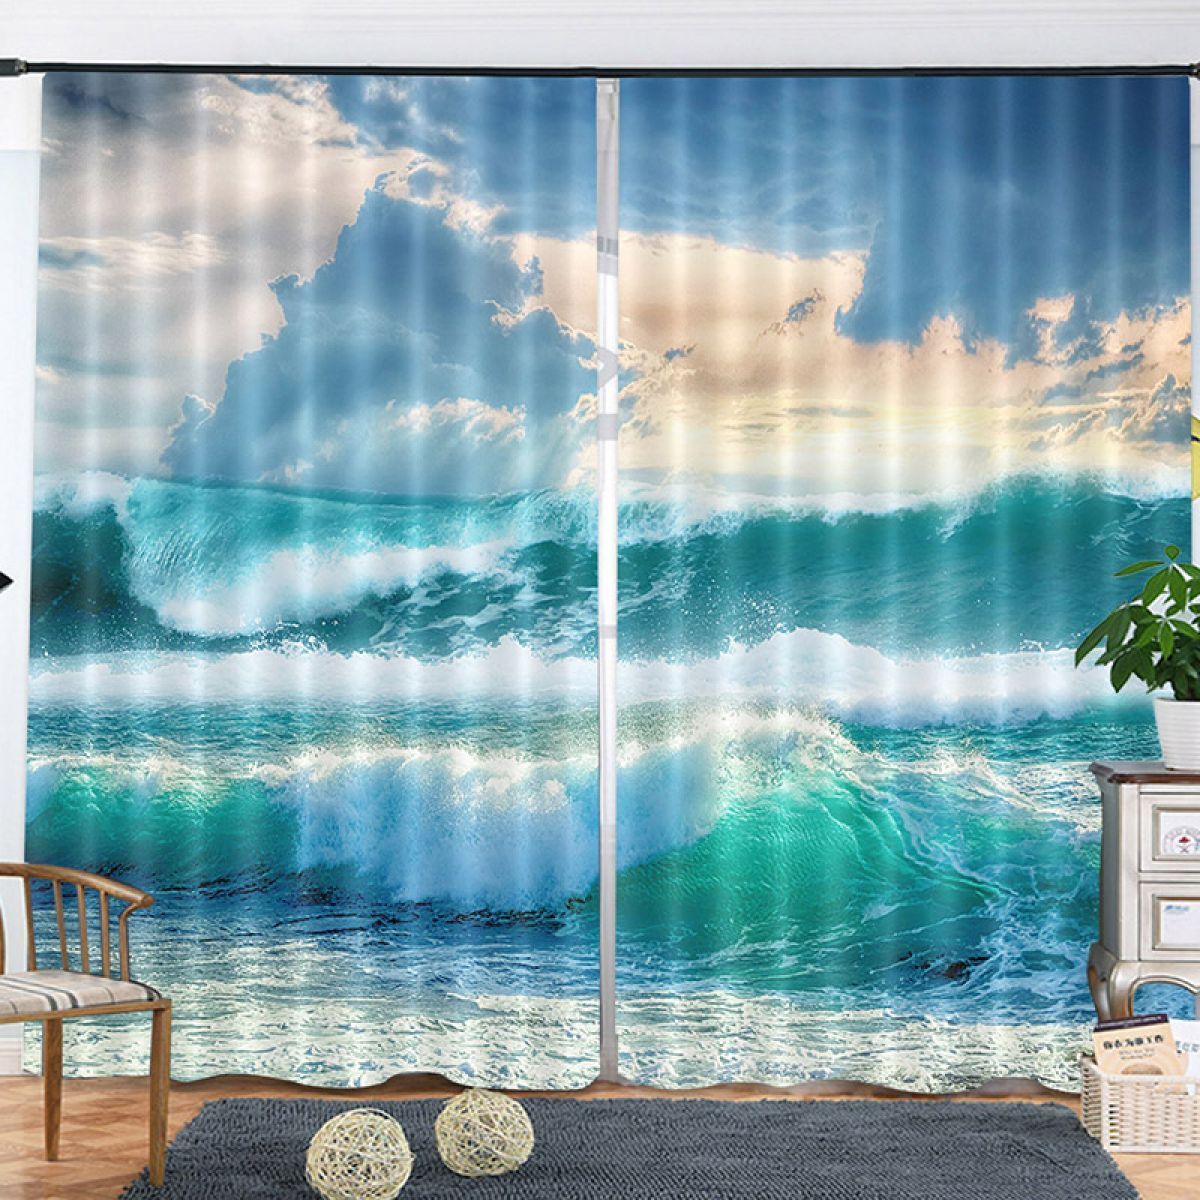 Tumbling Sea Printed Window Curtain Home Decor